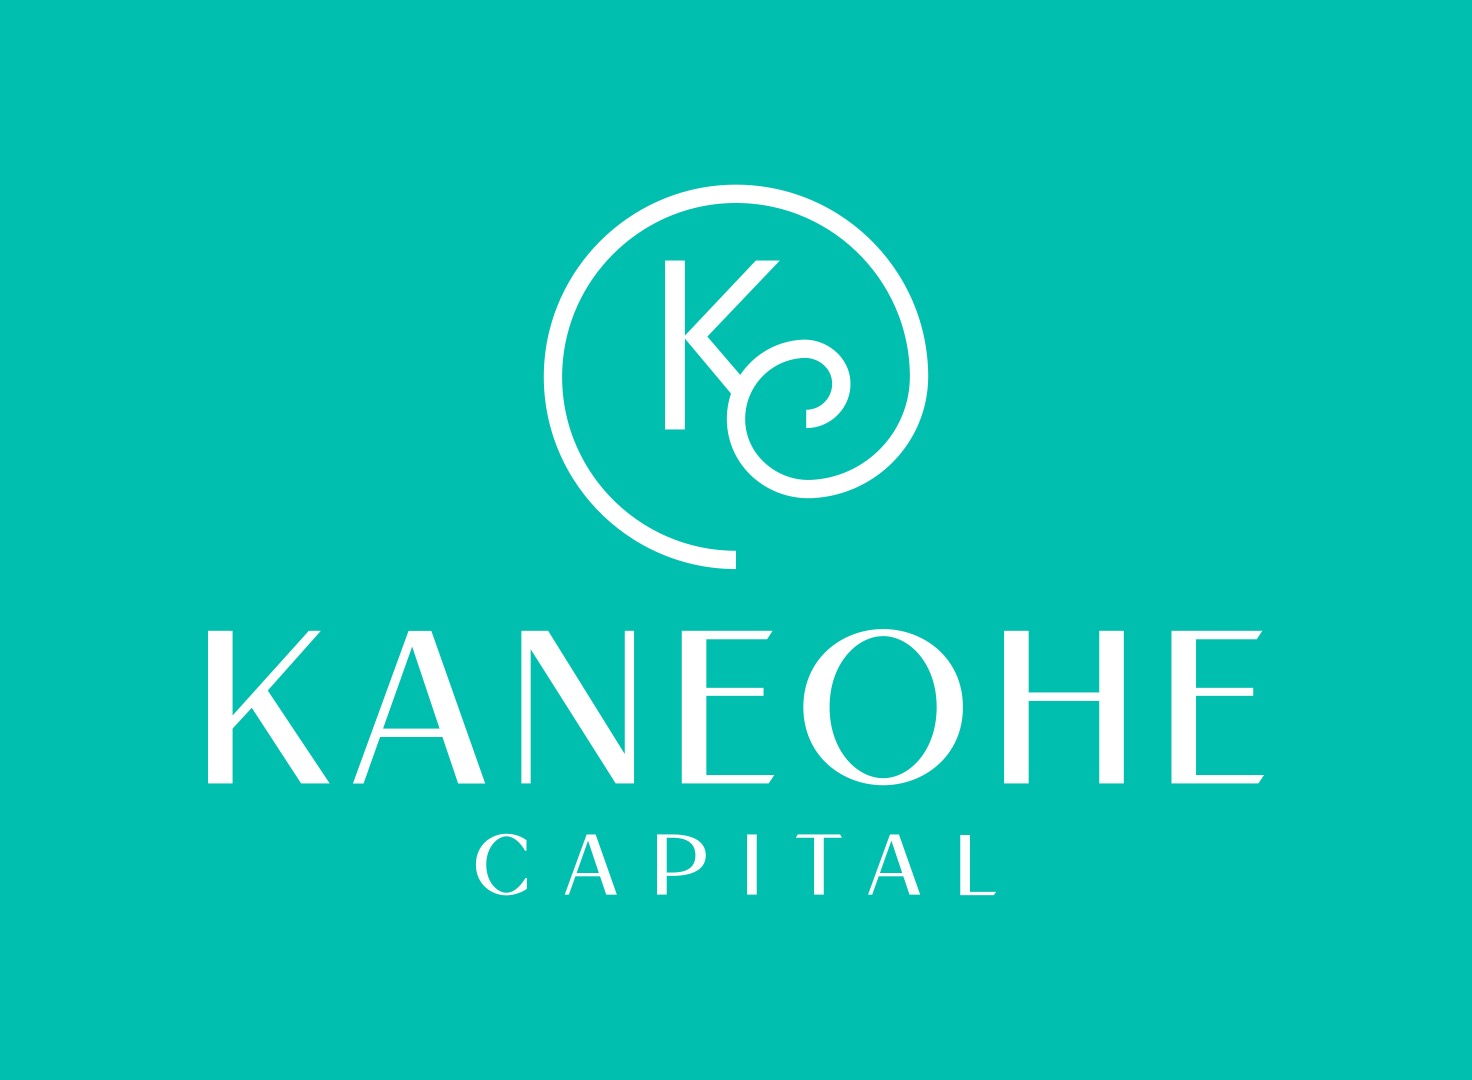 Kaneohe Capital Logo